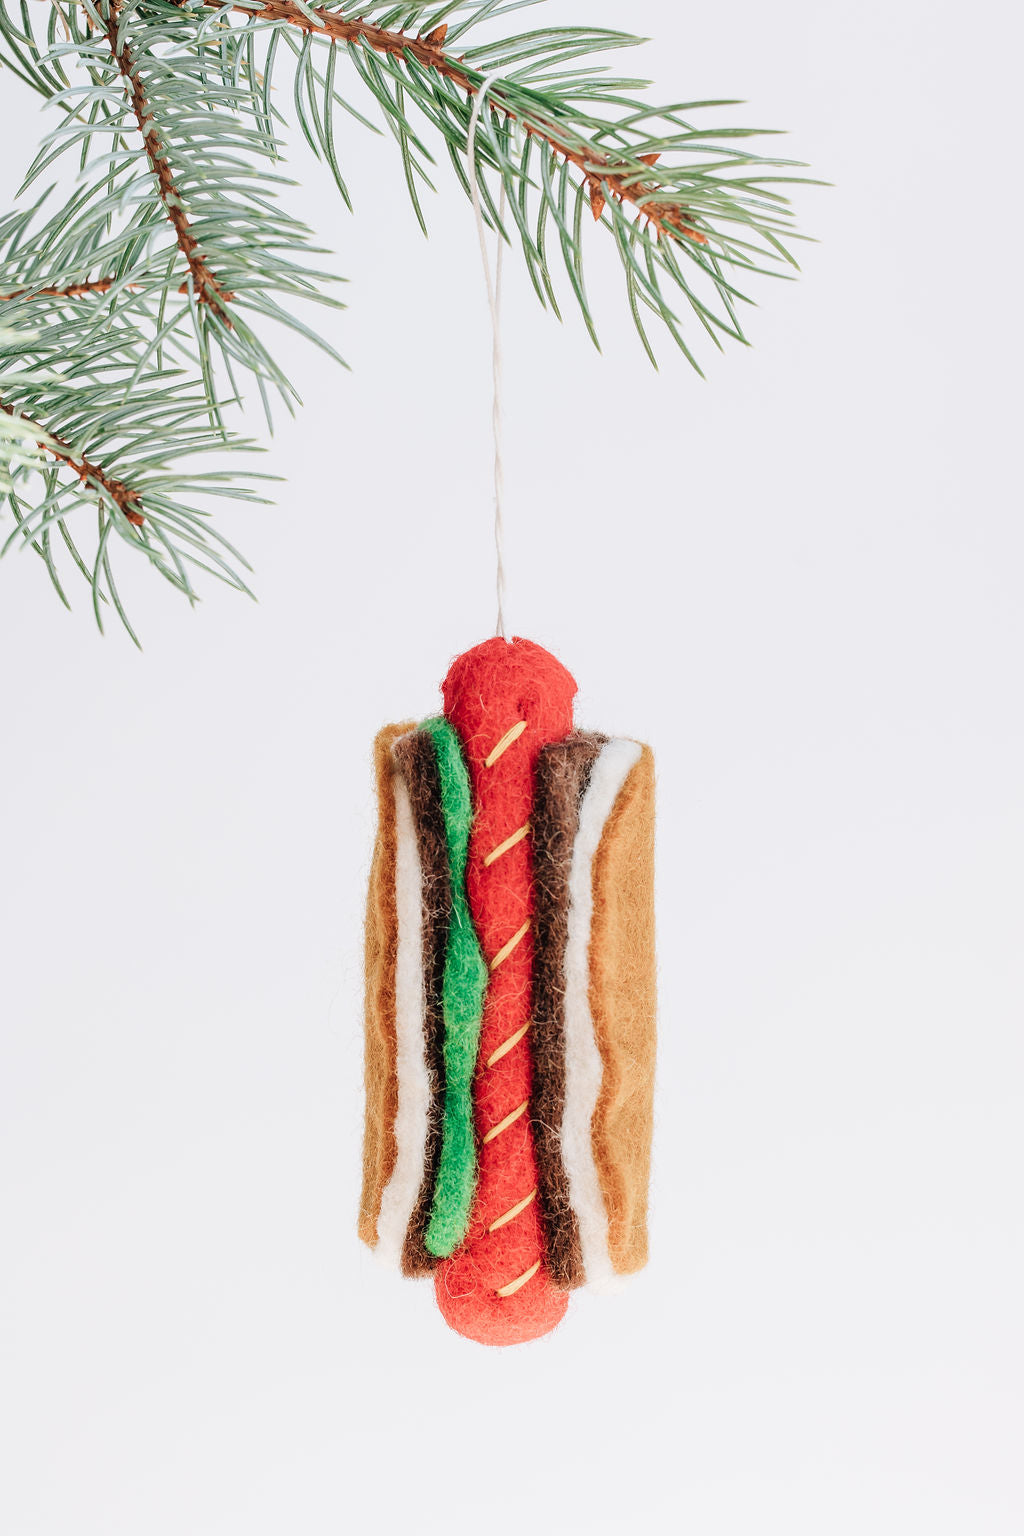 Hot Dog Ornament 